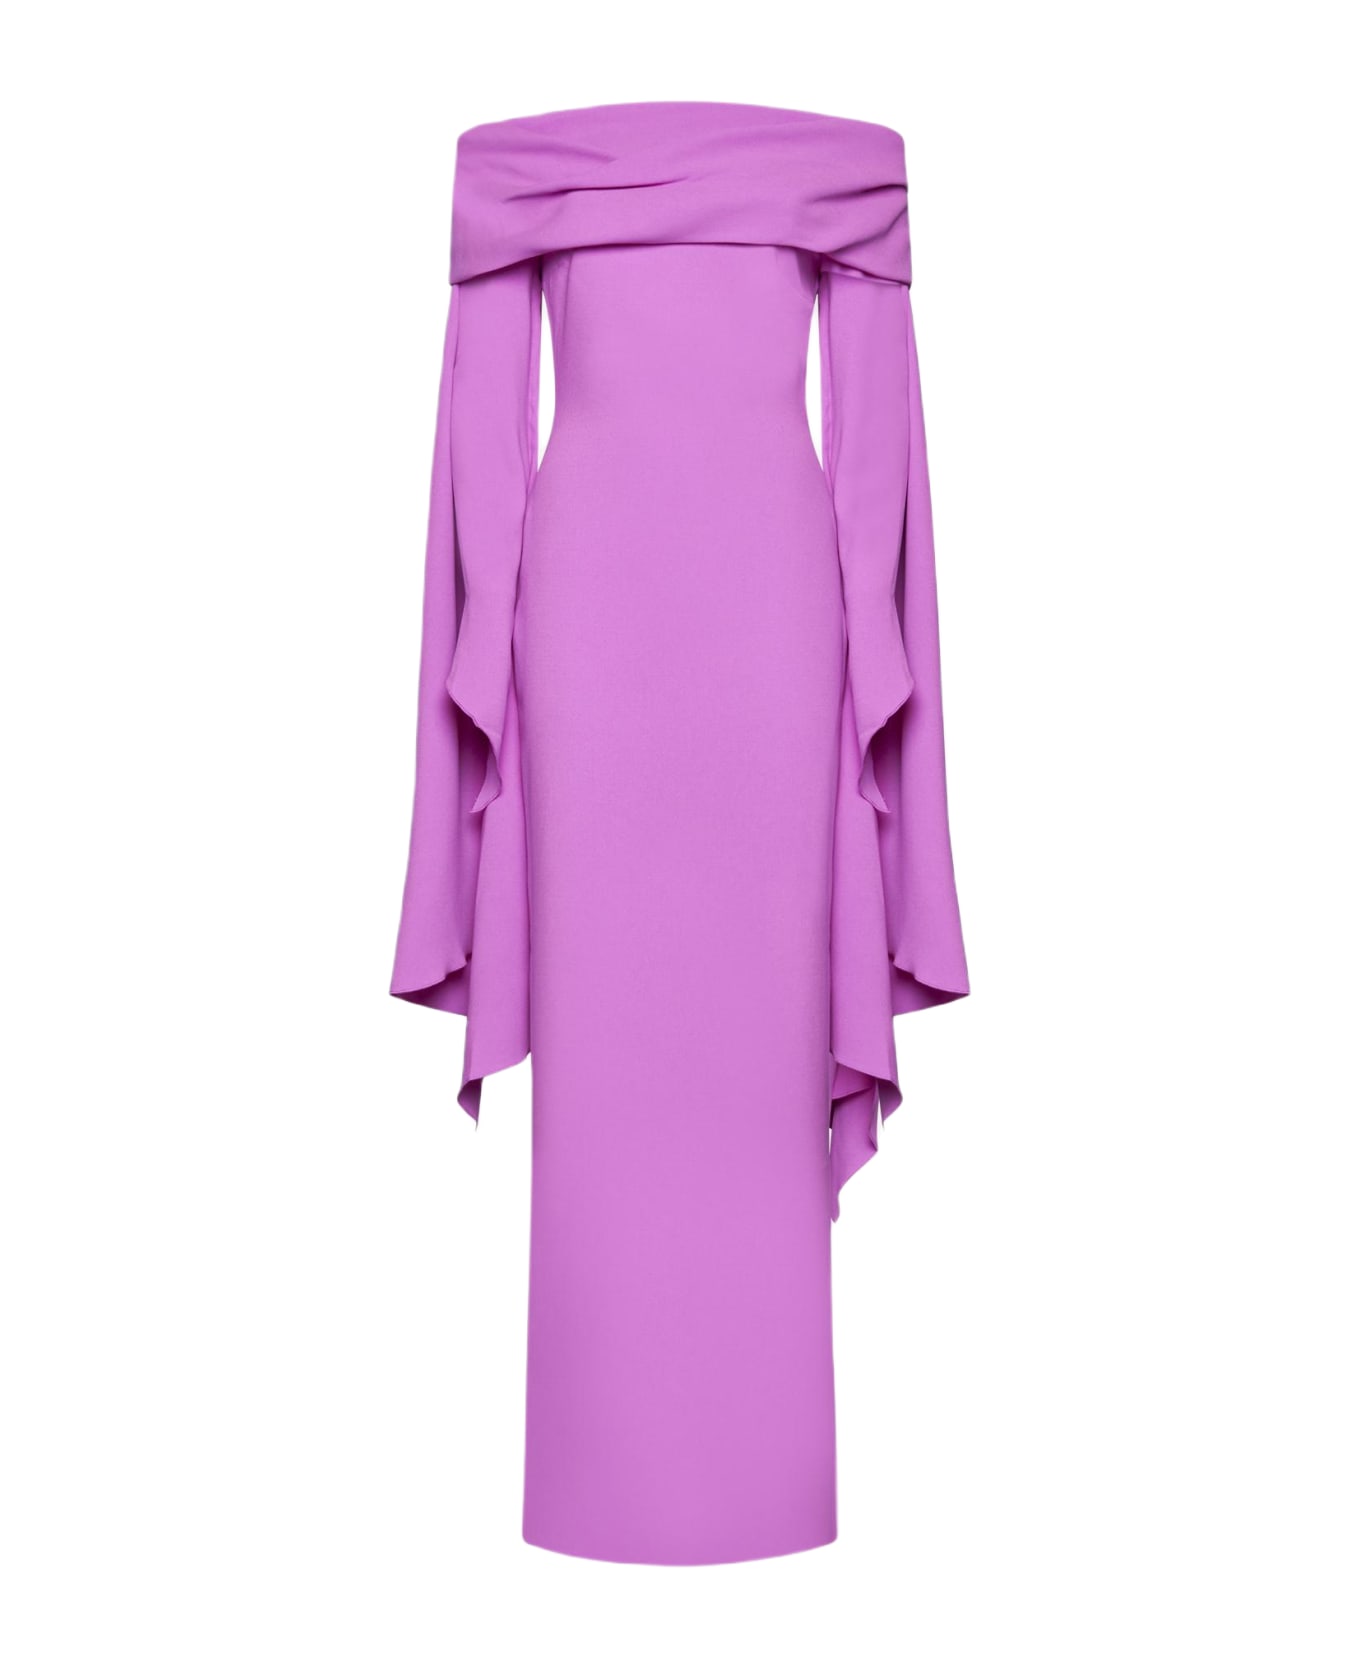 Solace London Arden Maxi Dress - Fuchsia